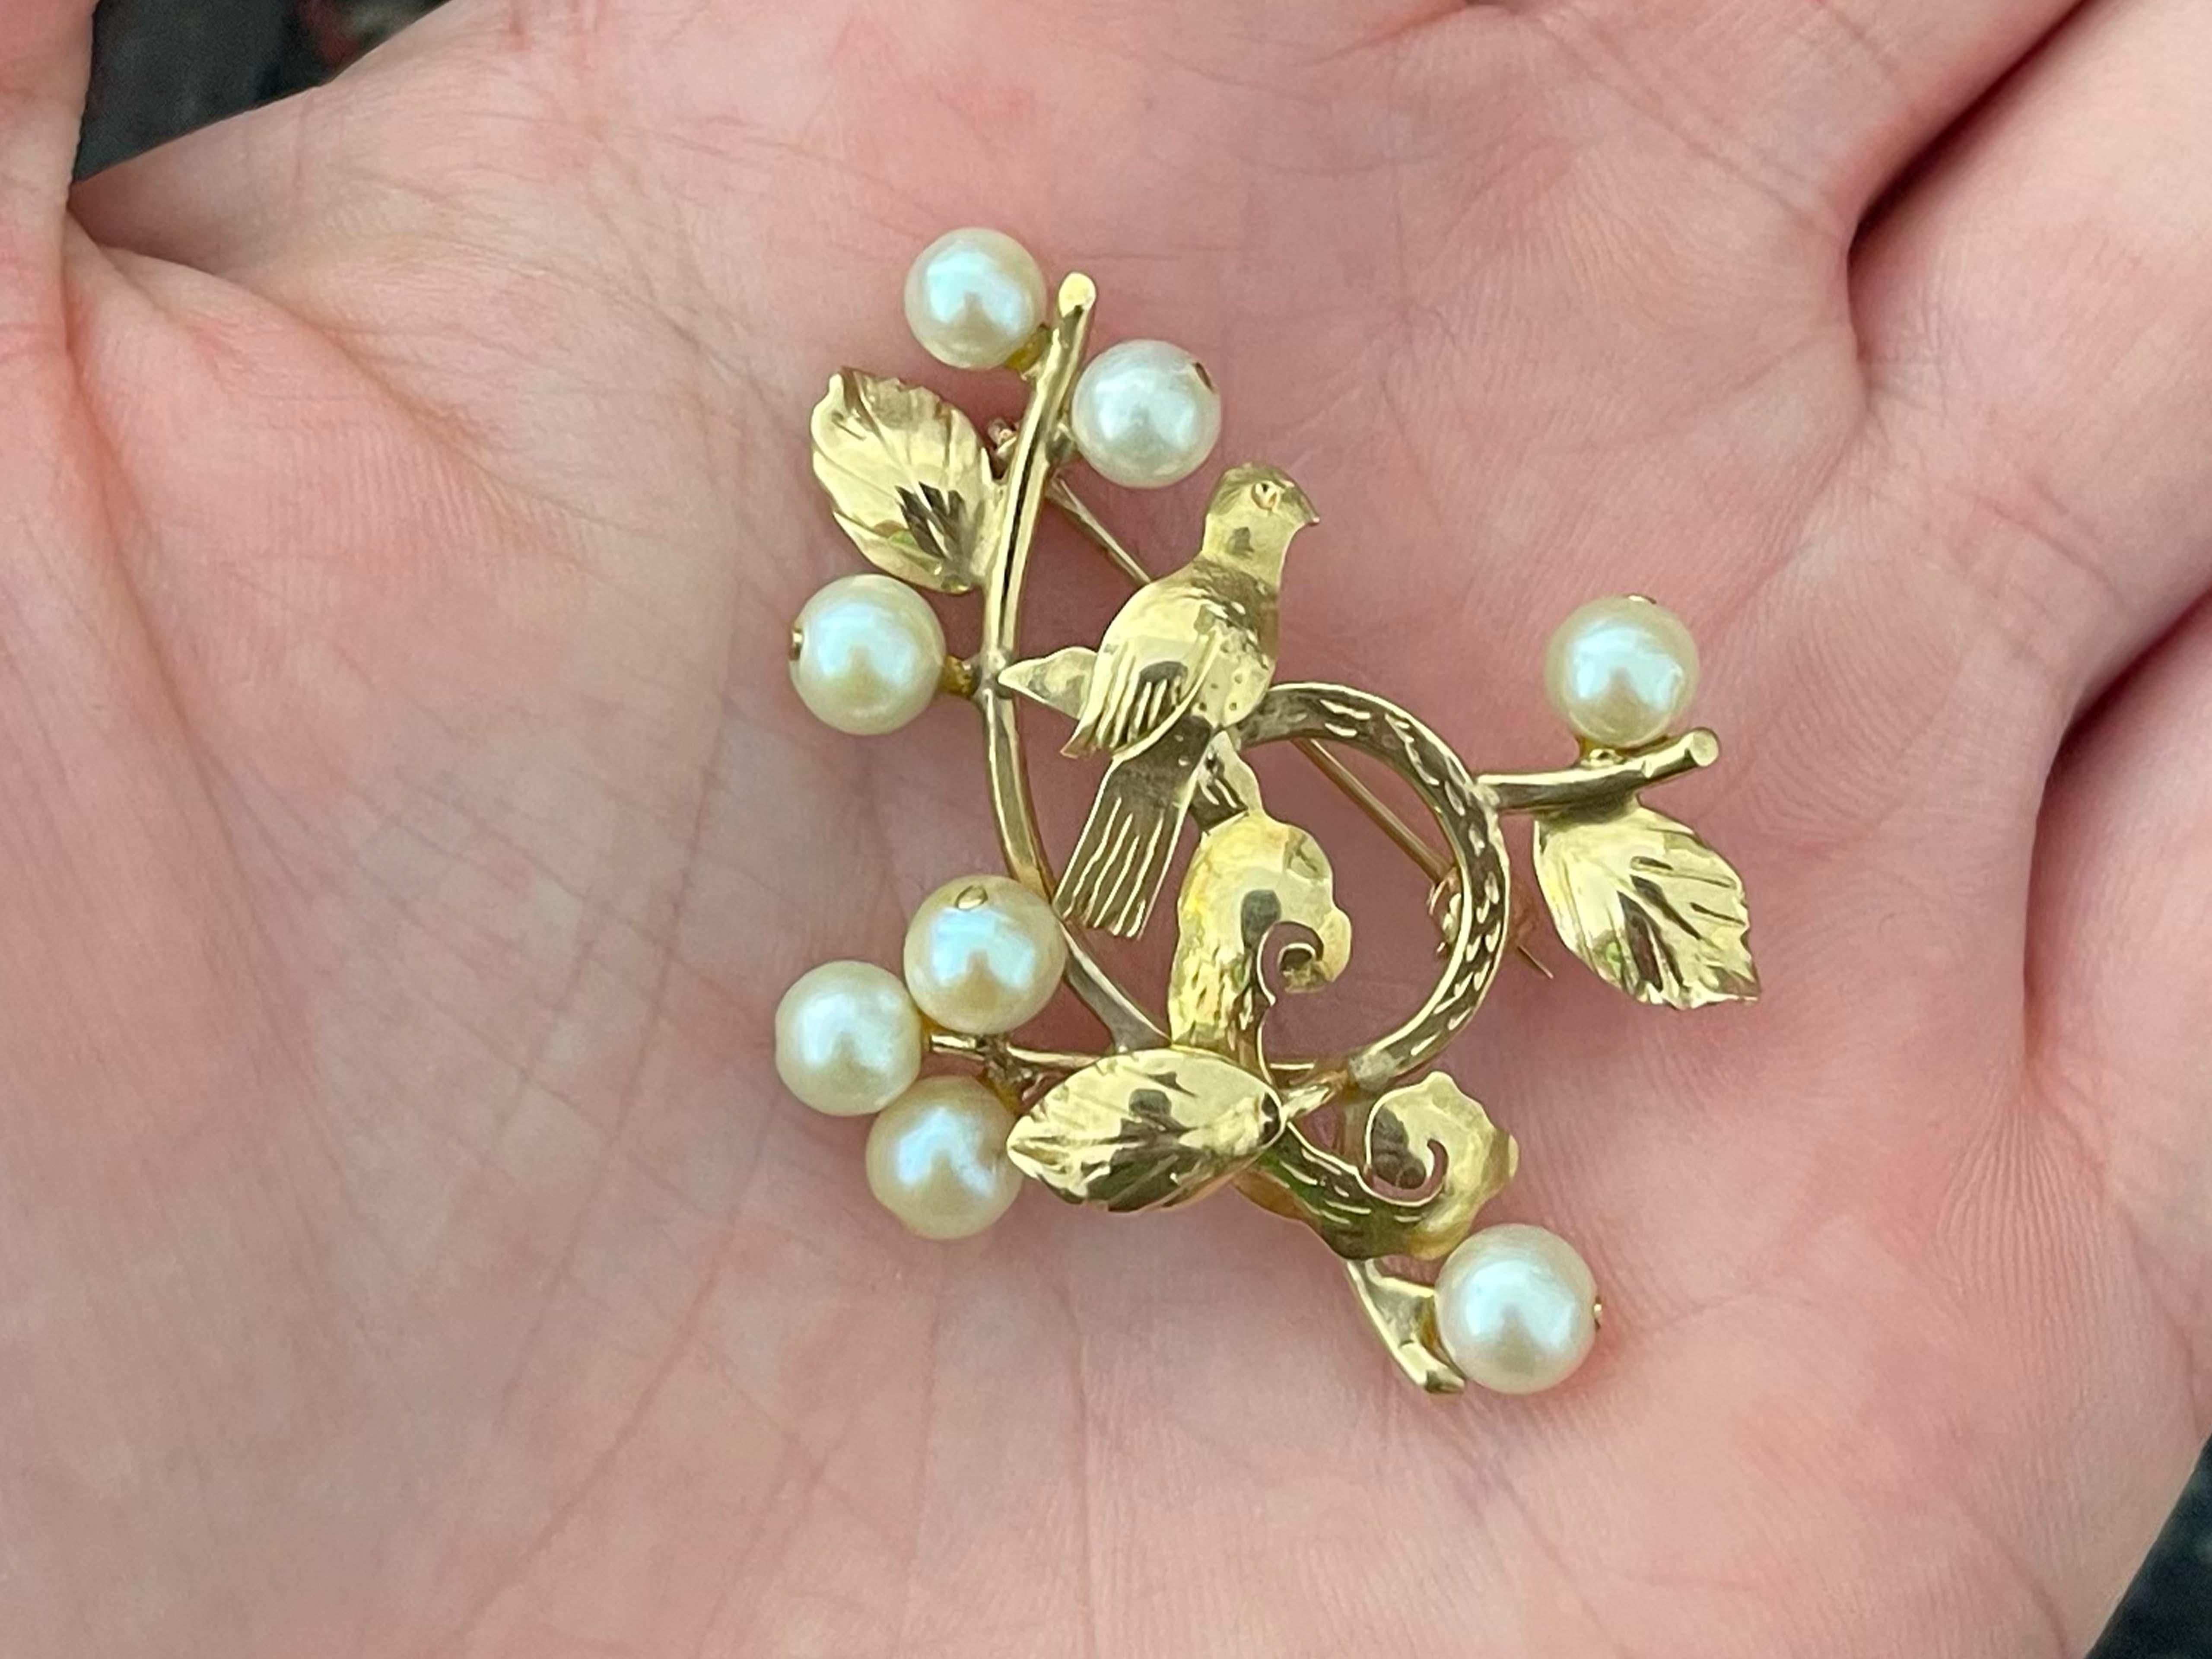 Broche Spécifications :

Designer : Ming's

Métal : Or jaune 14k

Perles : Perles d'Akoya

Poids total : 5,1 grammes

Dimensions de la broche : 1.5